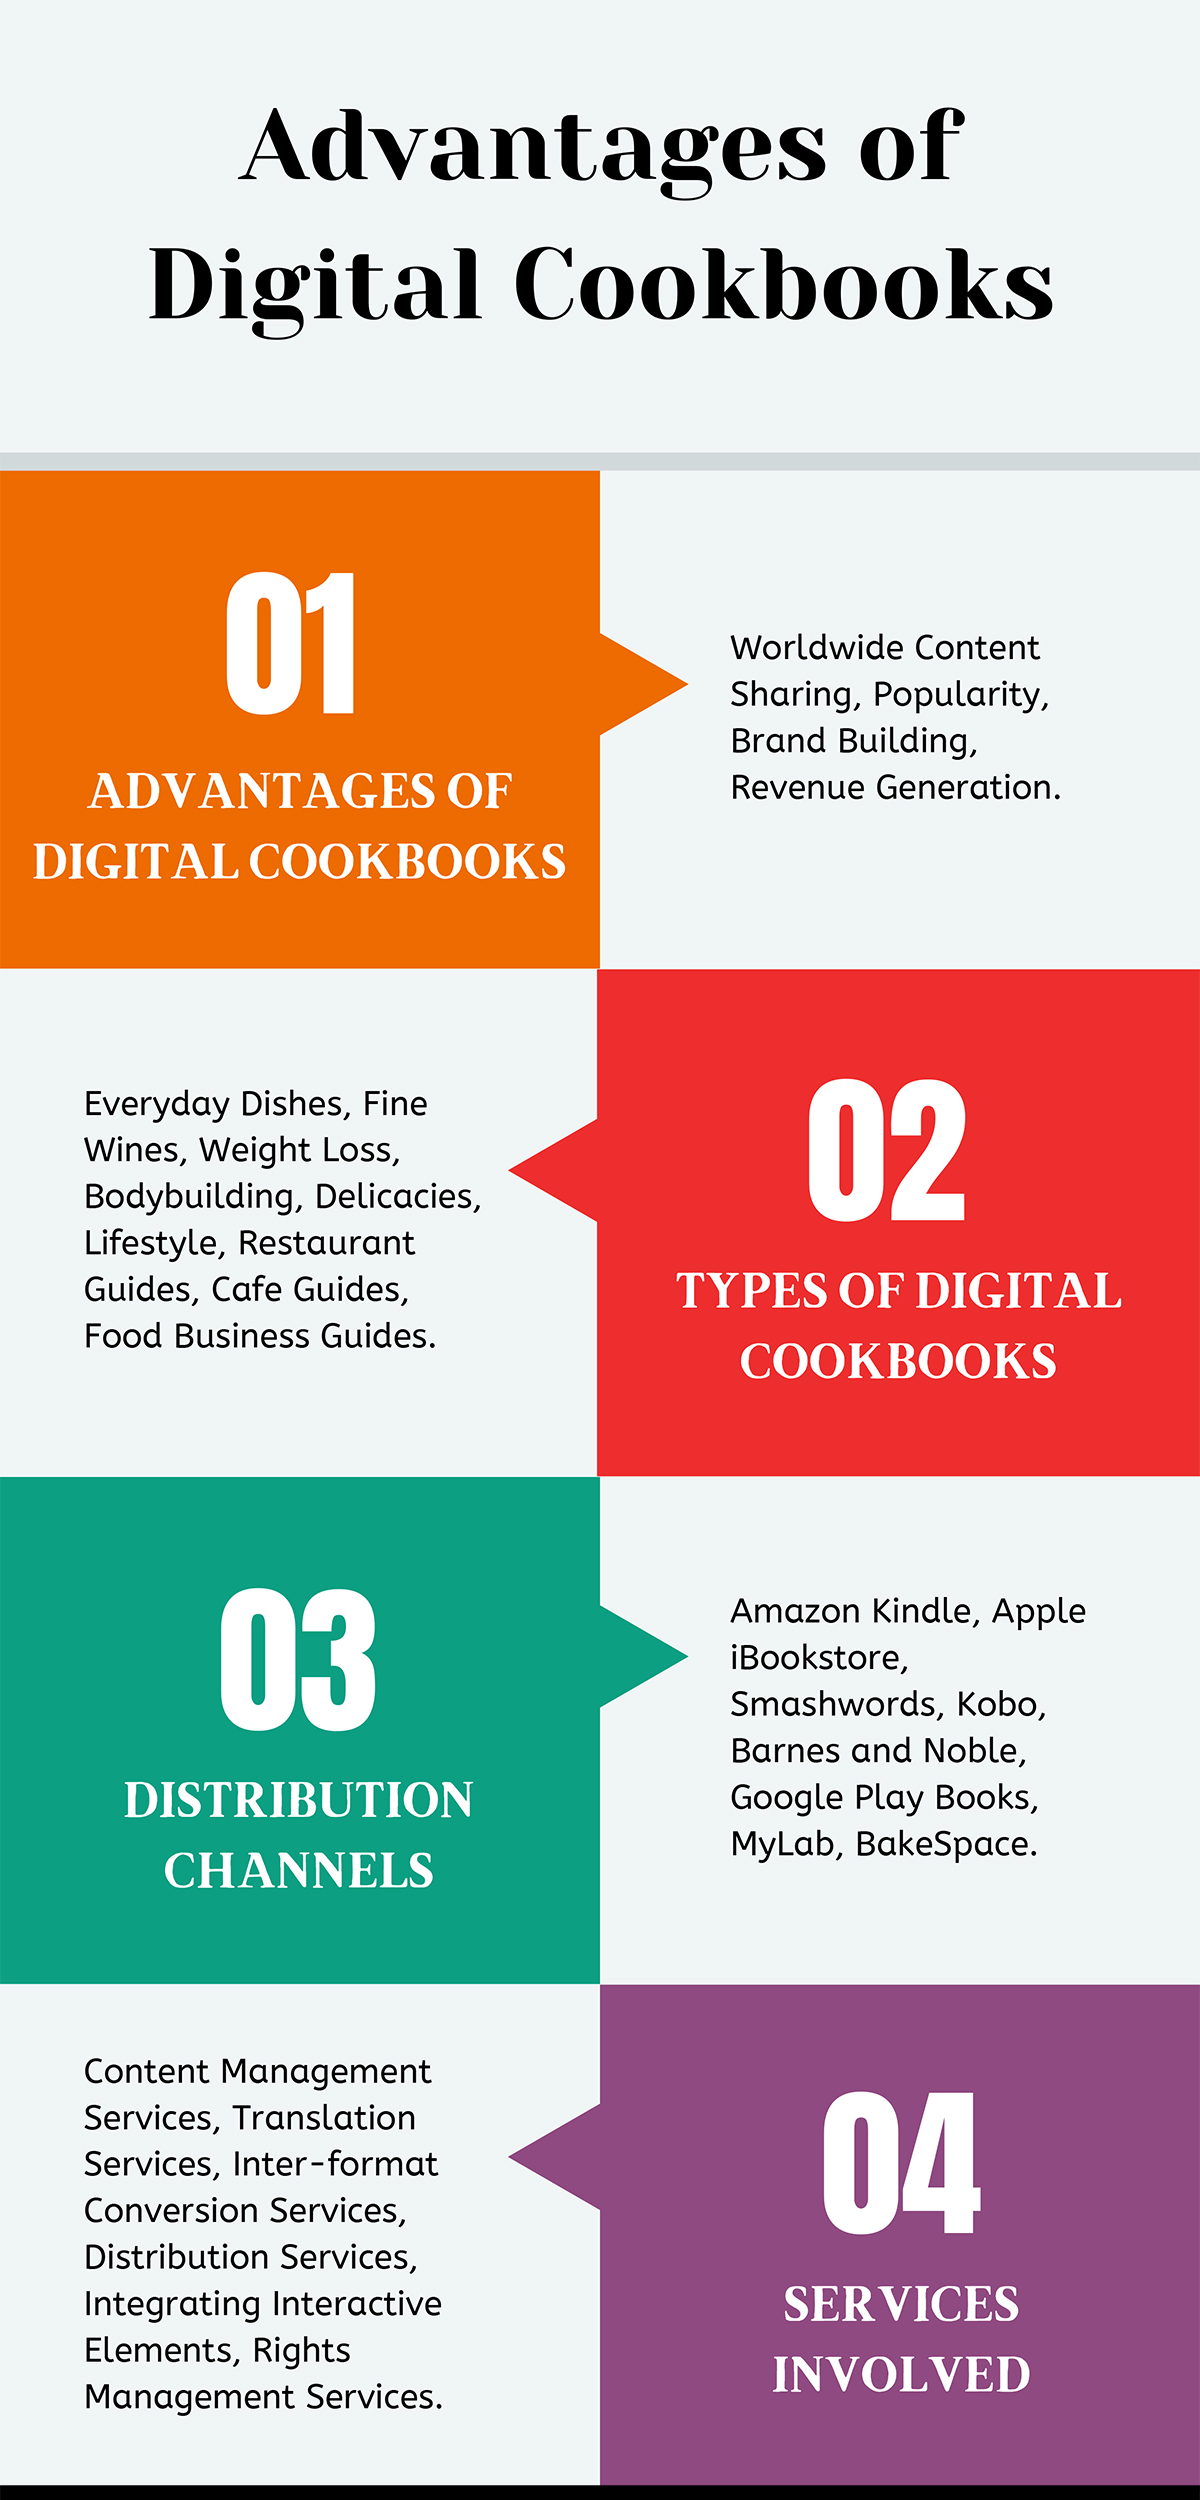 Advantages of Digital Cookbooks